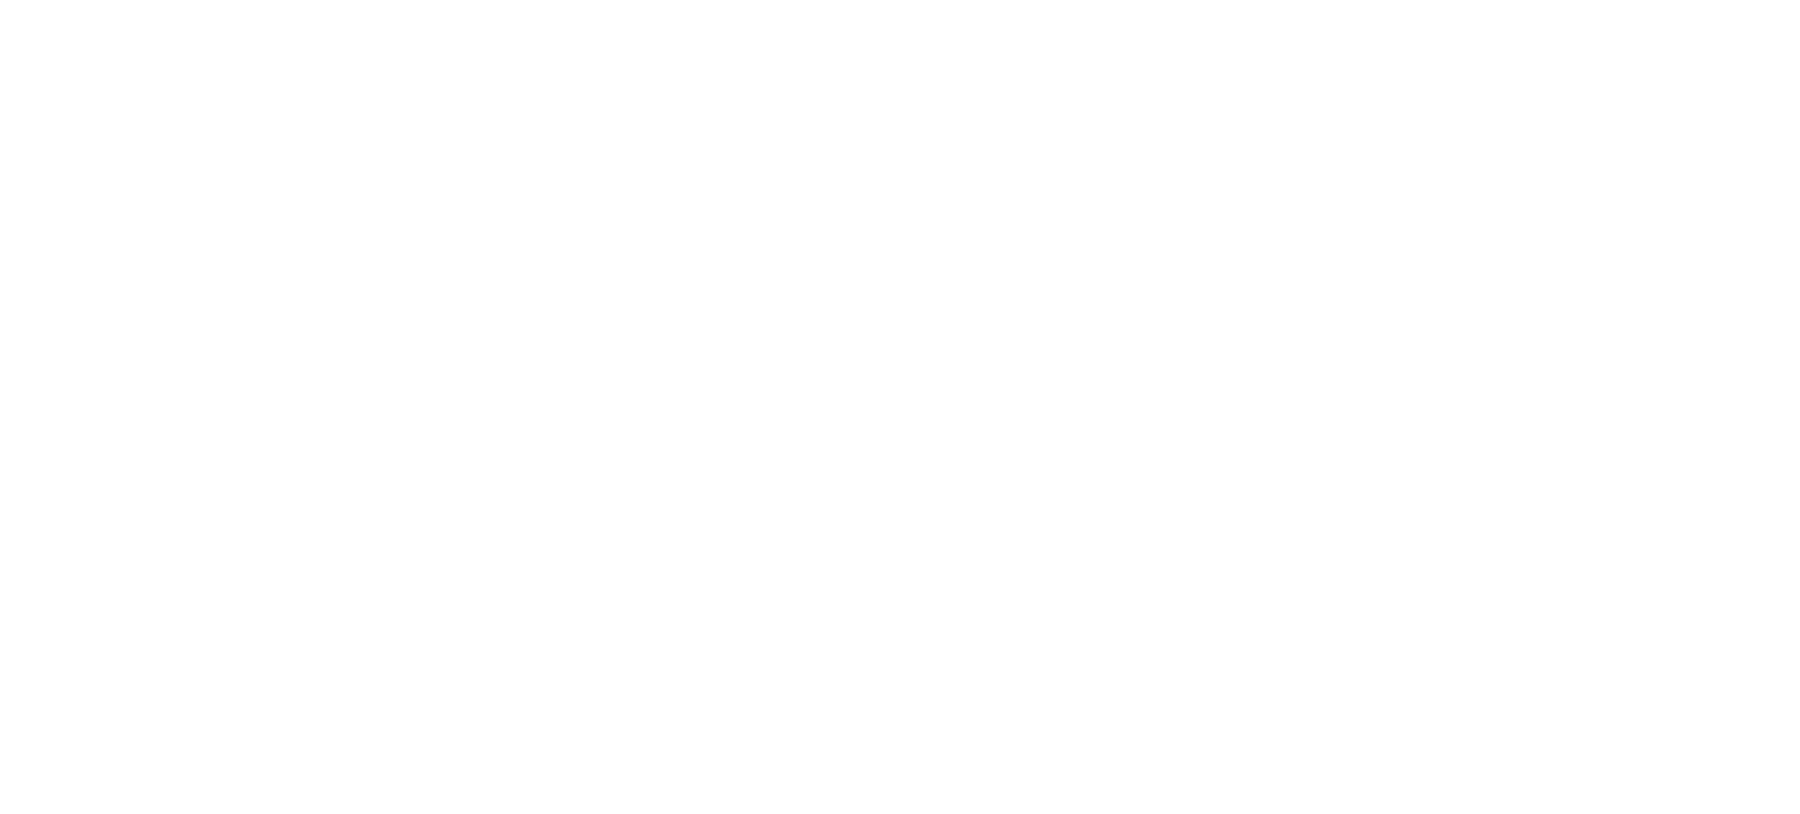 NAA National Apartment Association